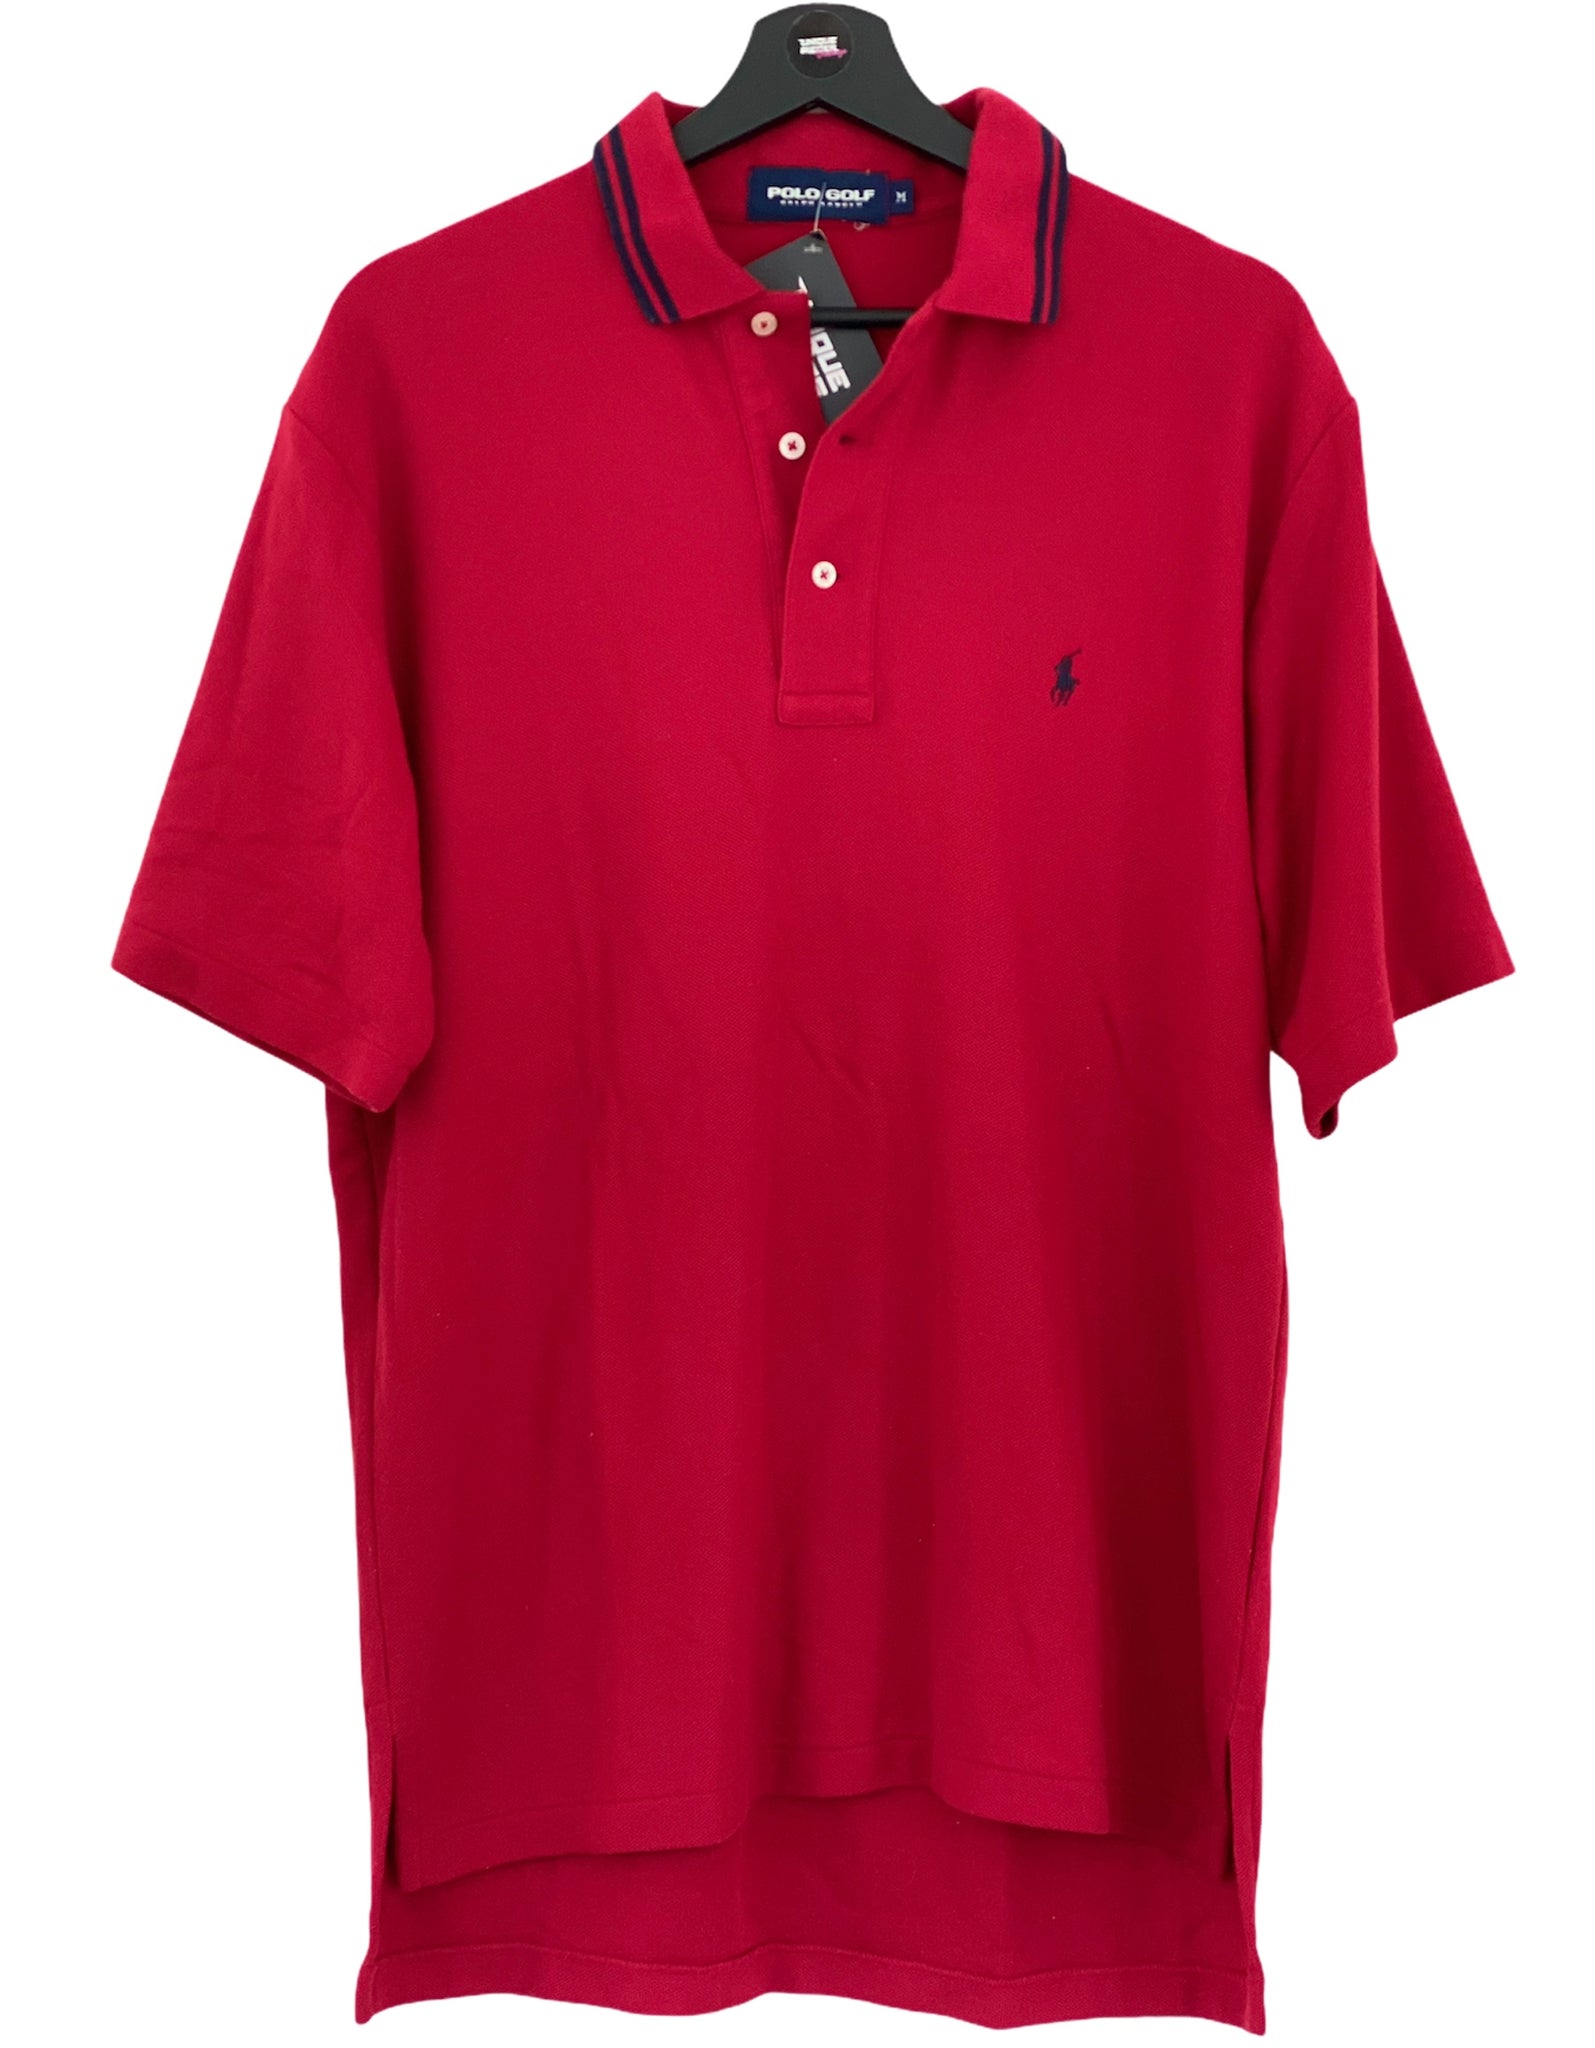 Ralph Lauren Polo Golf shirt red medium freeshipping - Unique Pieces Vintage